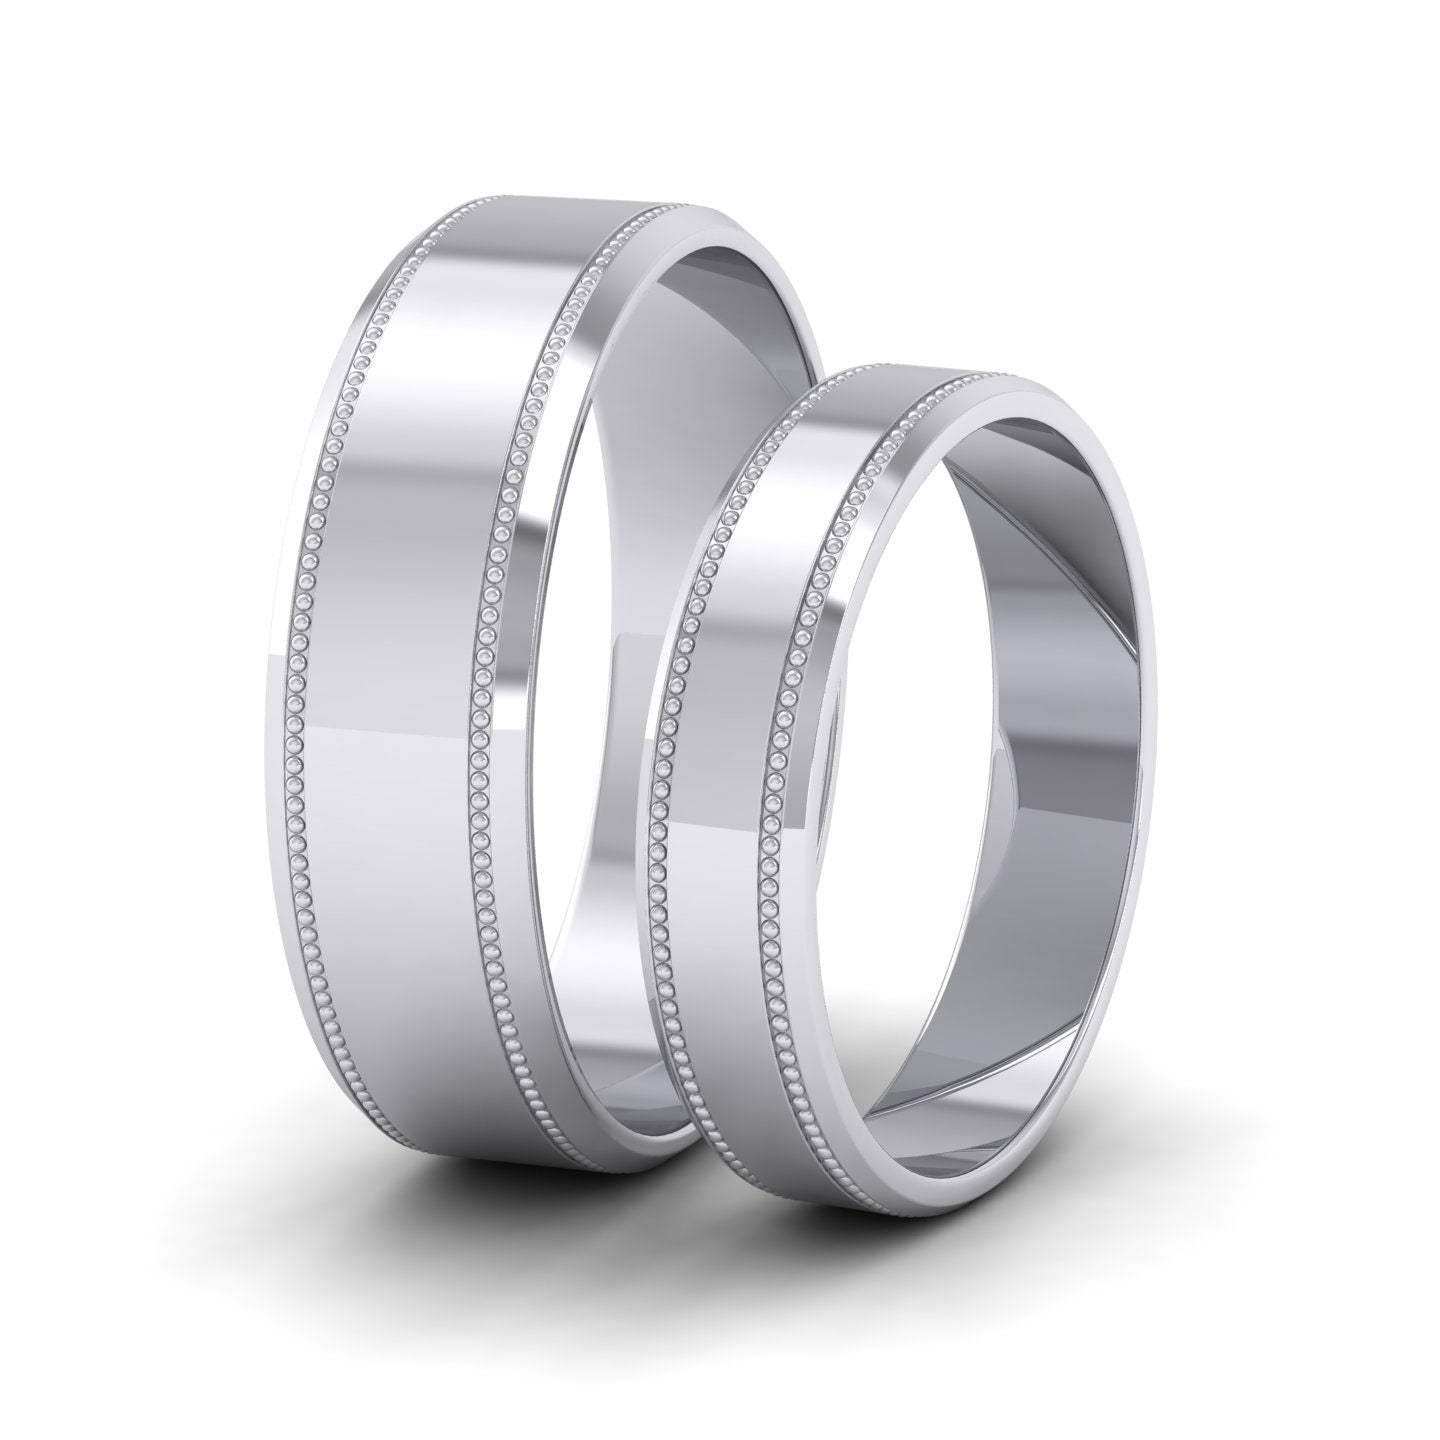 Bevelled Edge And Millgrain Pattern 950 Platinum 4mm Flat Wedding Ring